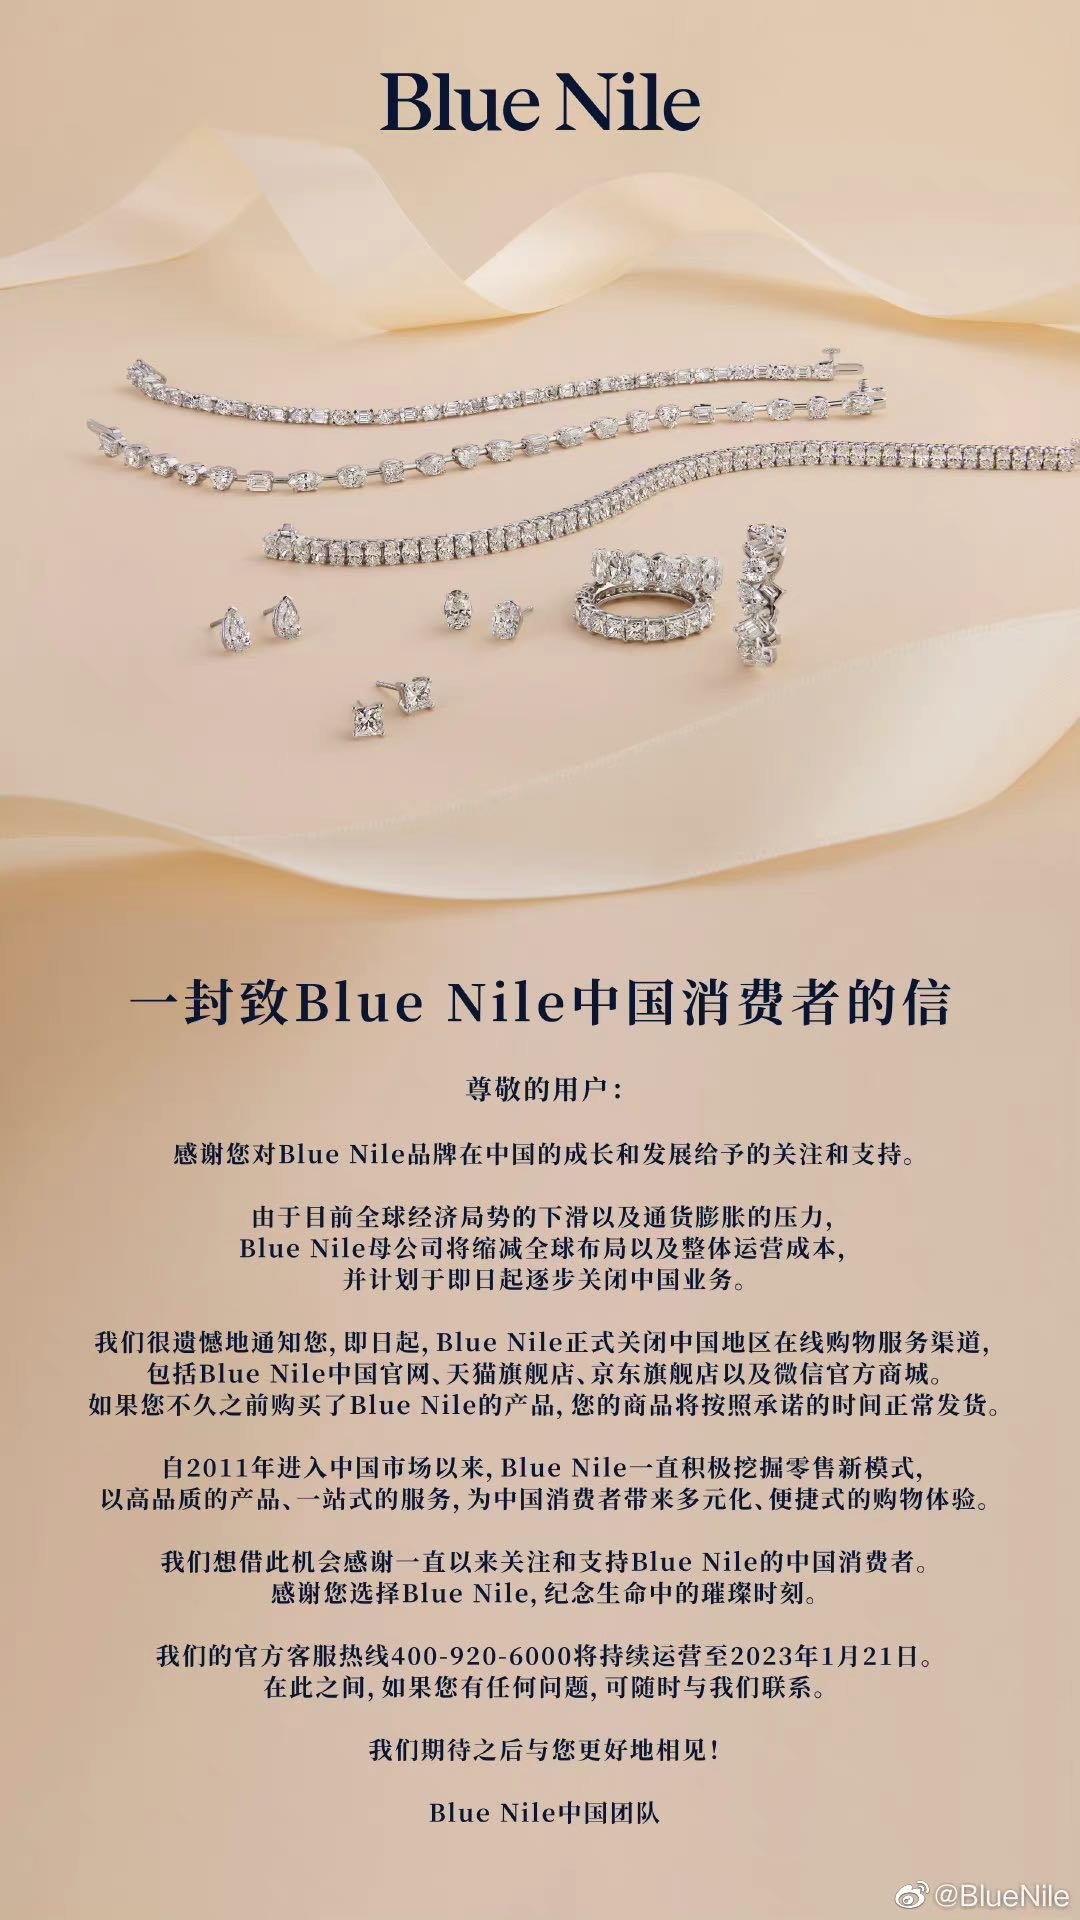 Blue Nile于11月18日逐步退出中国市场！官方客服热线将持续运营至2023年1月21日！